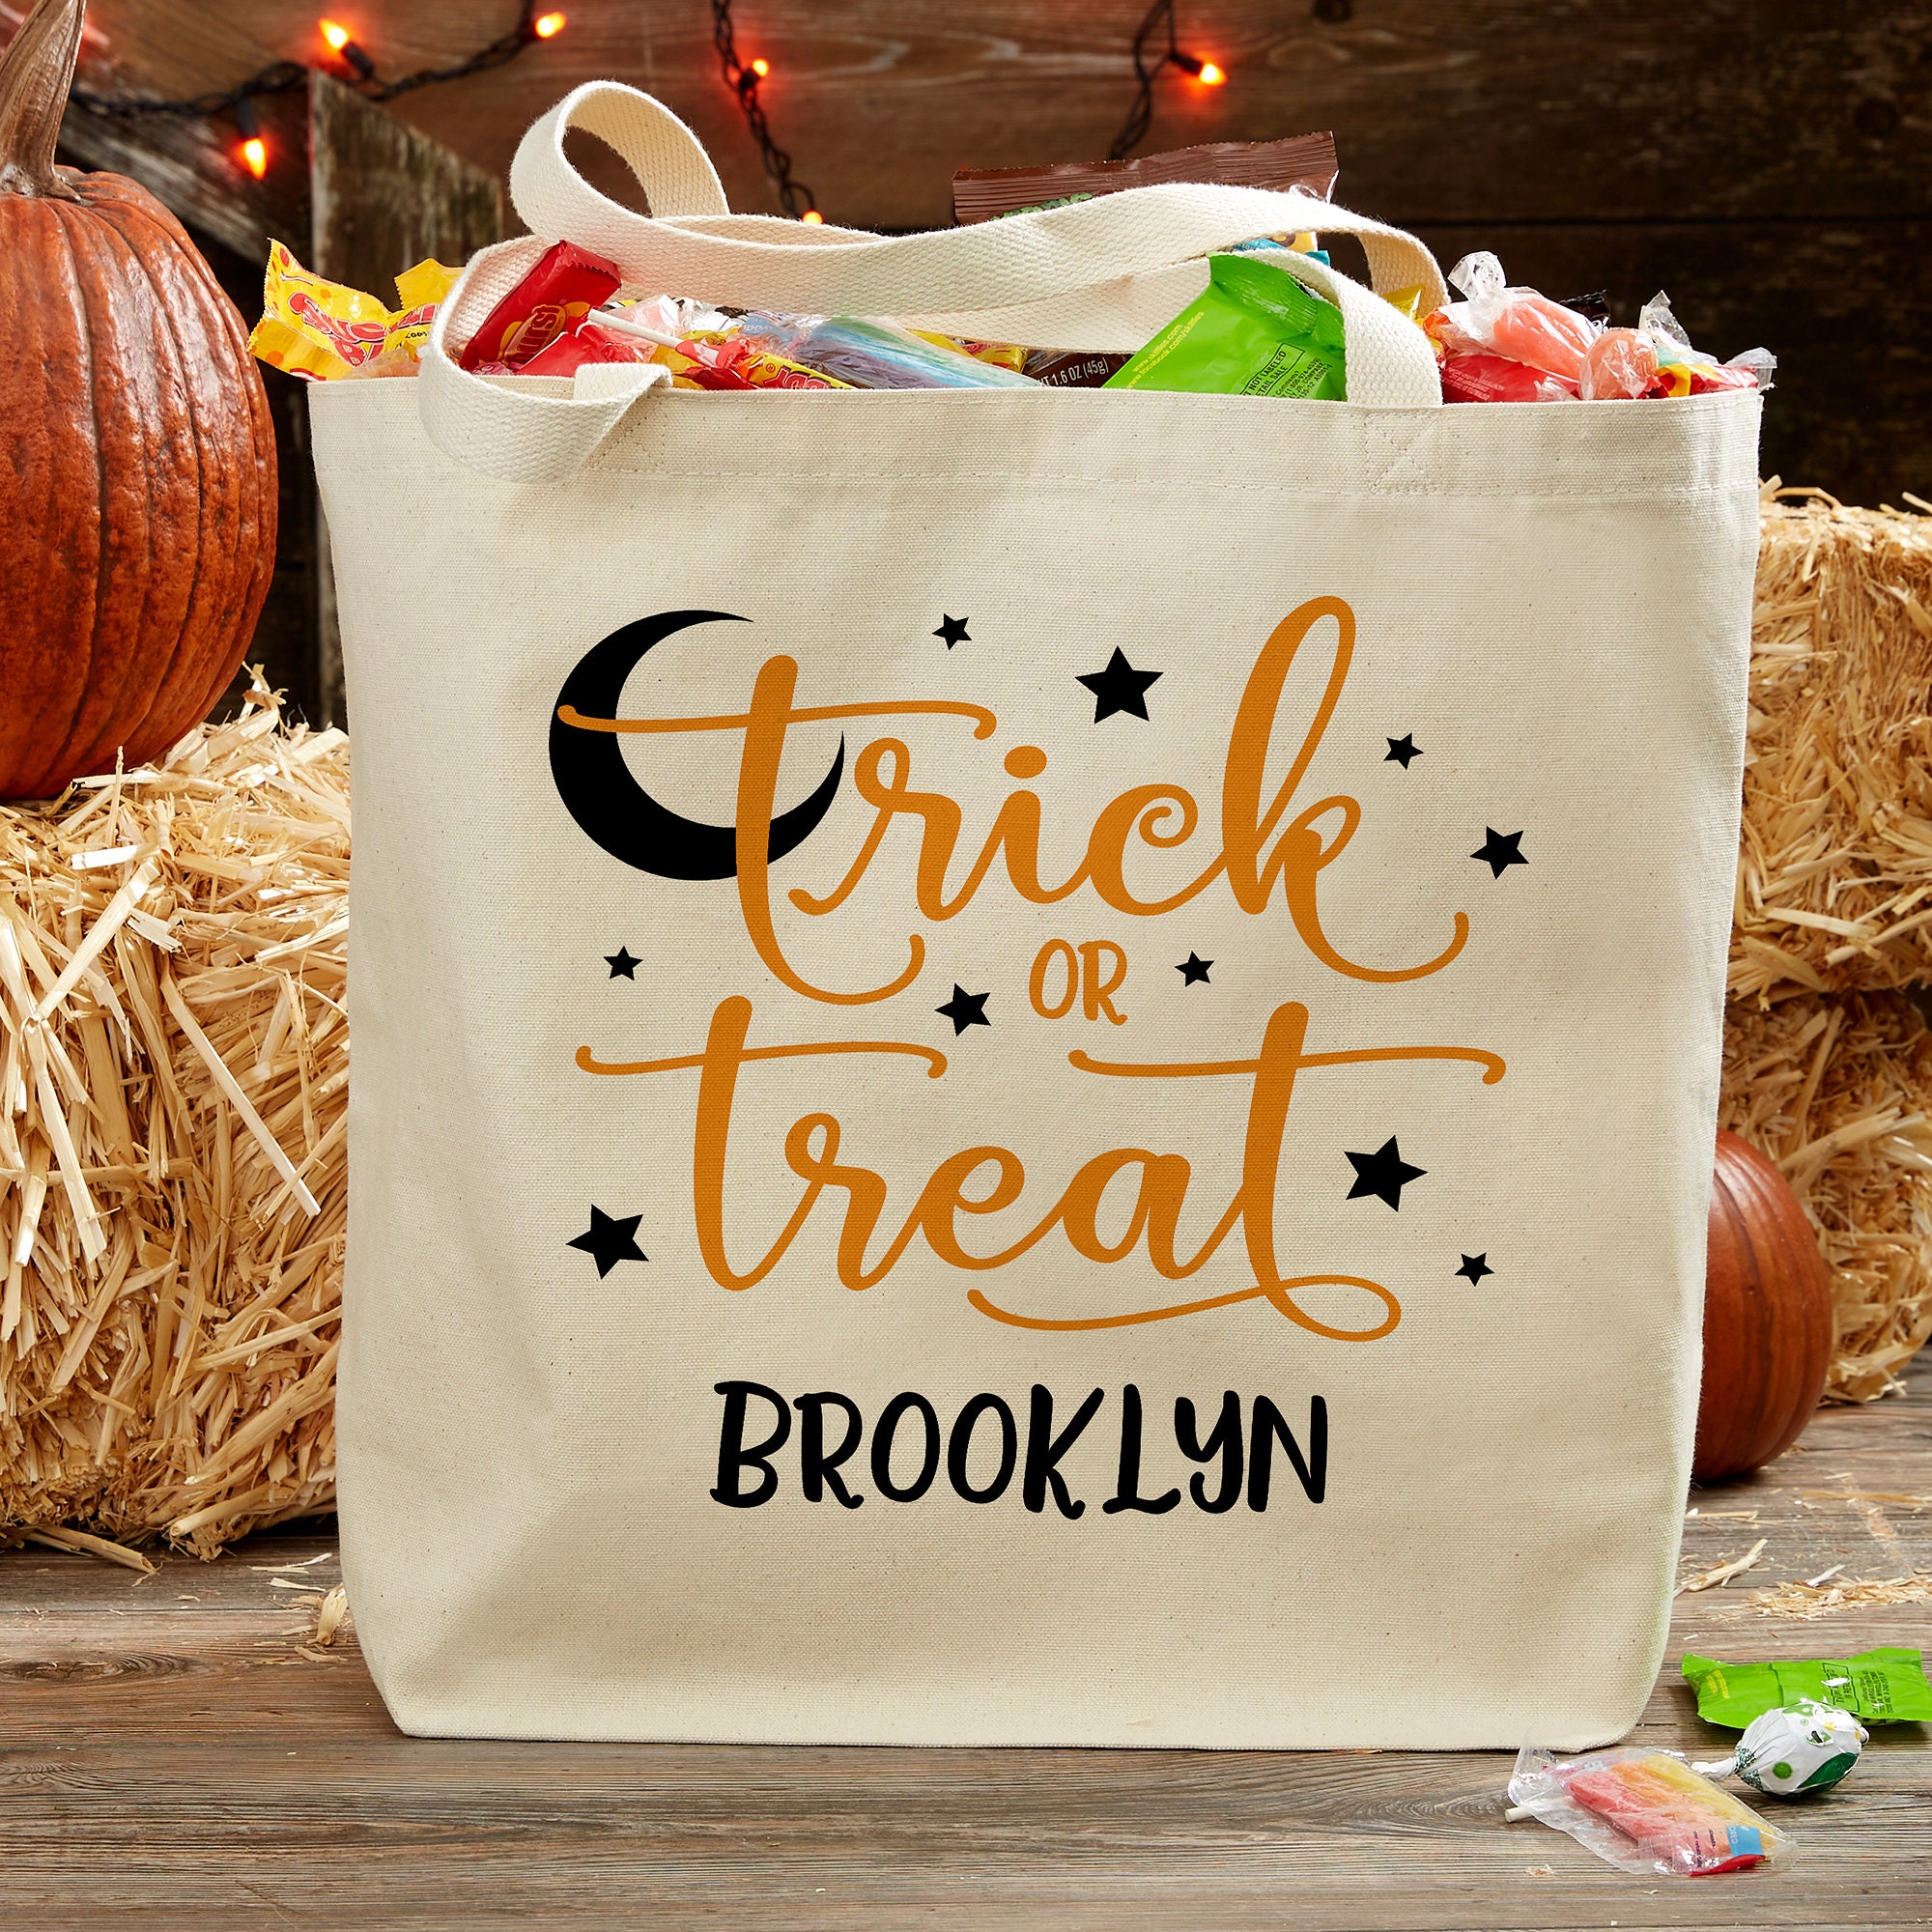 Trick or Treat Pumpkins Black Halloween Personalized Tote Bag DIY Kits